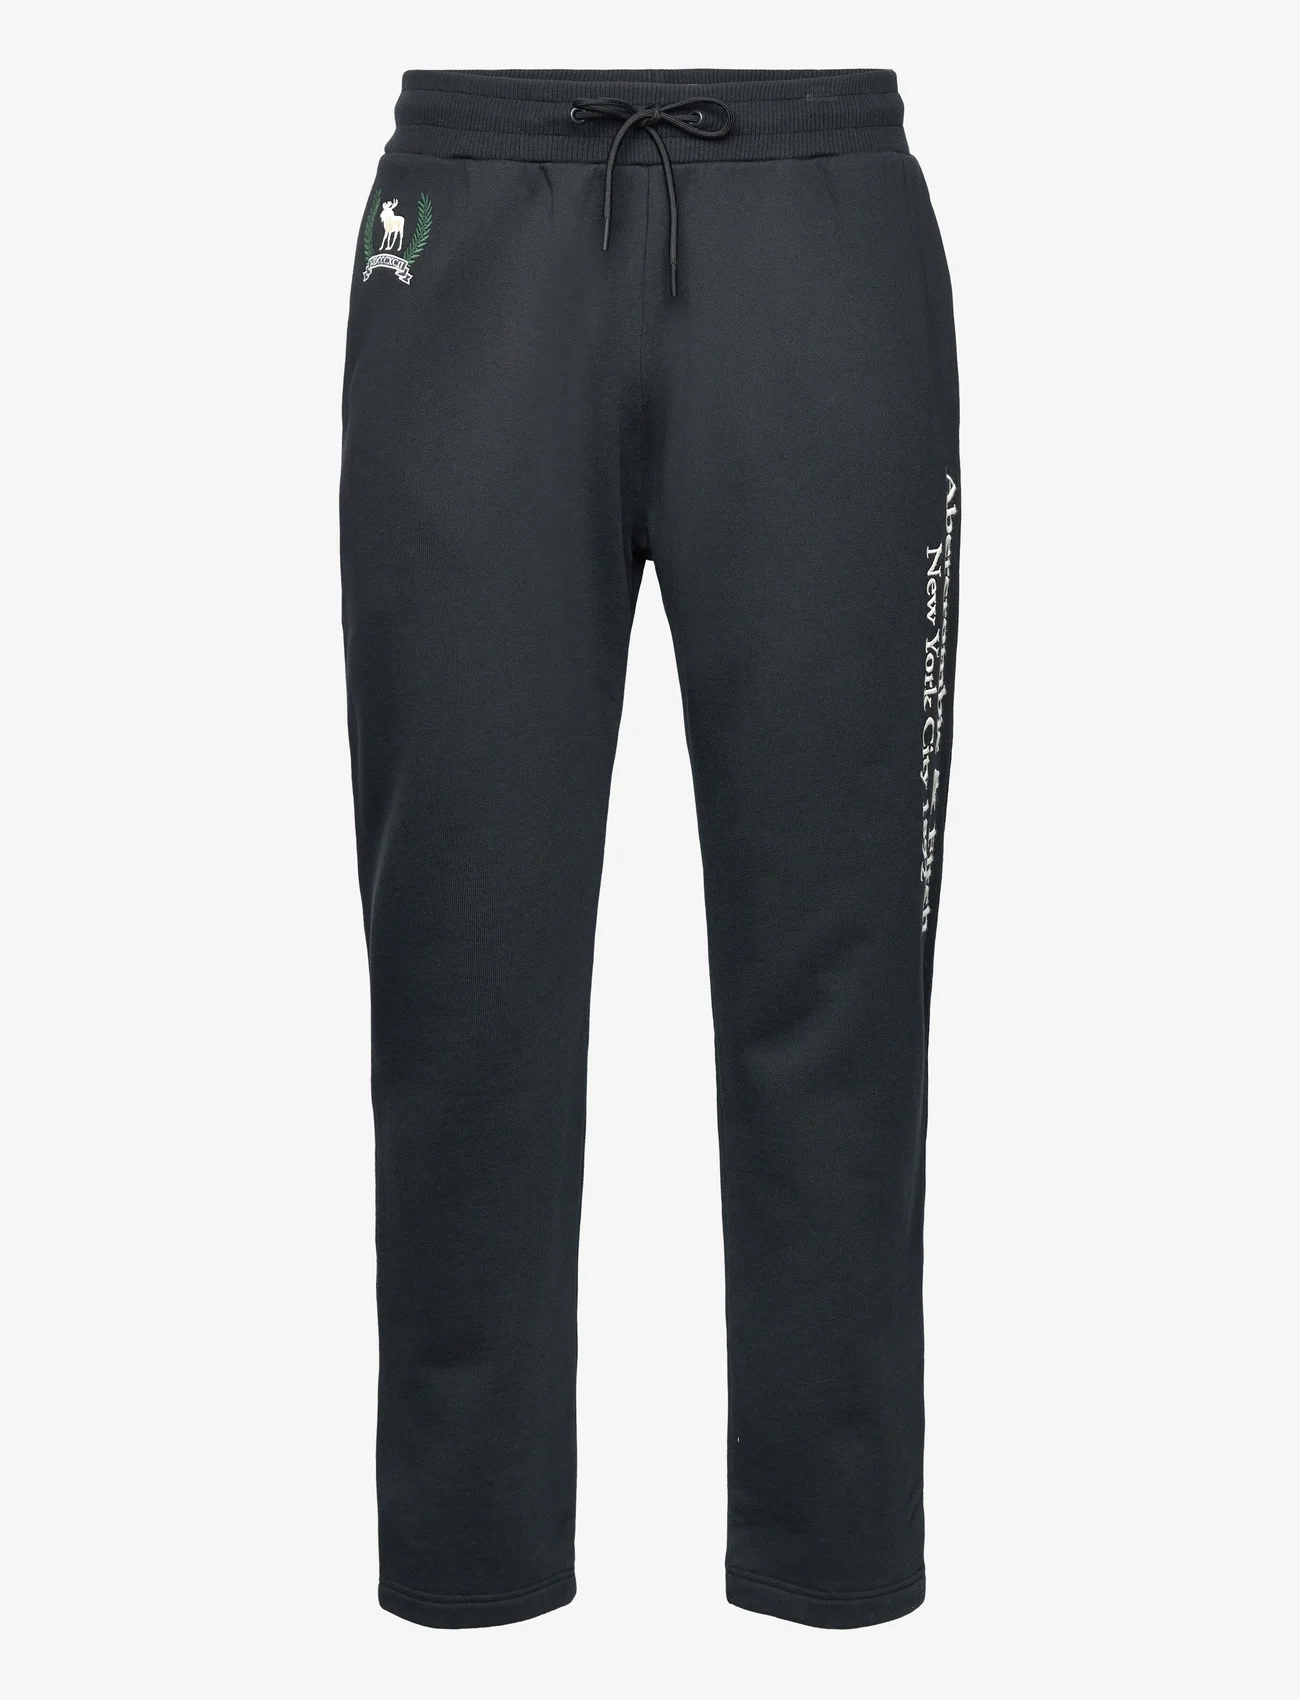 Abercrombie & Fitch - ANF MENS SWEATPANTS - spodnie dresowe - casual black update - 0